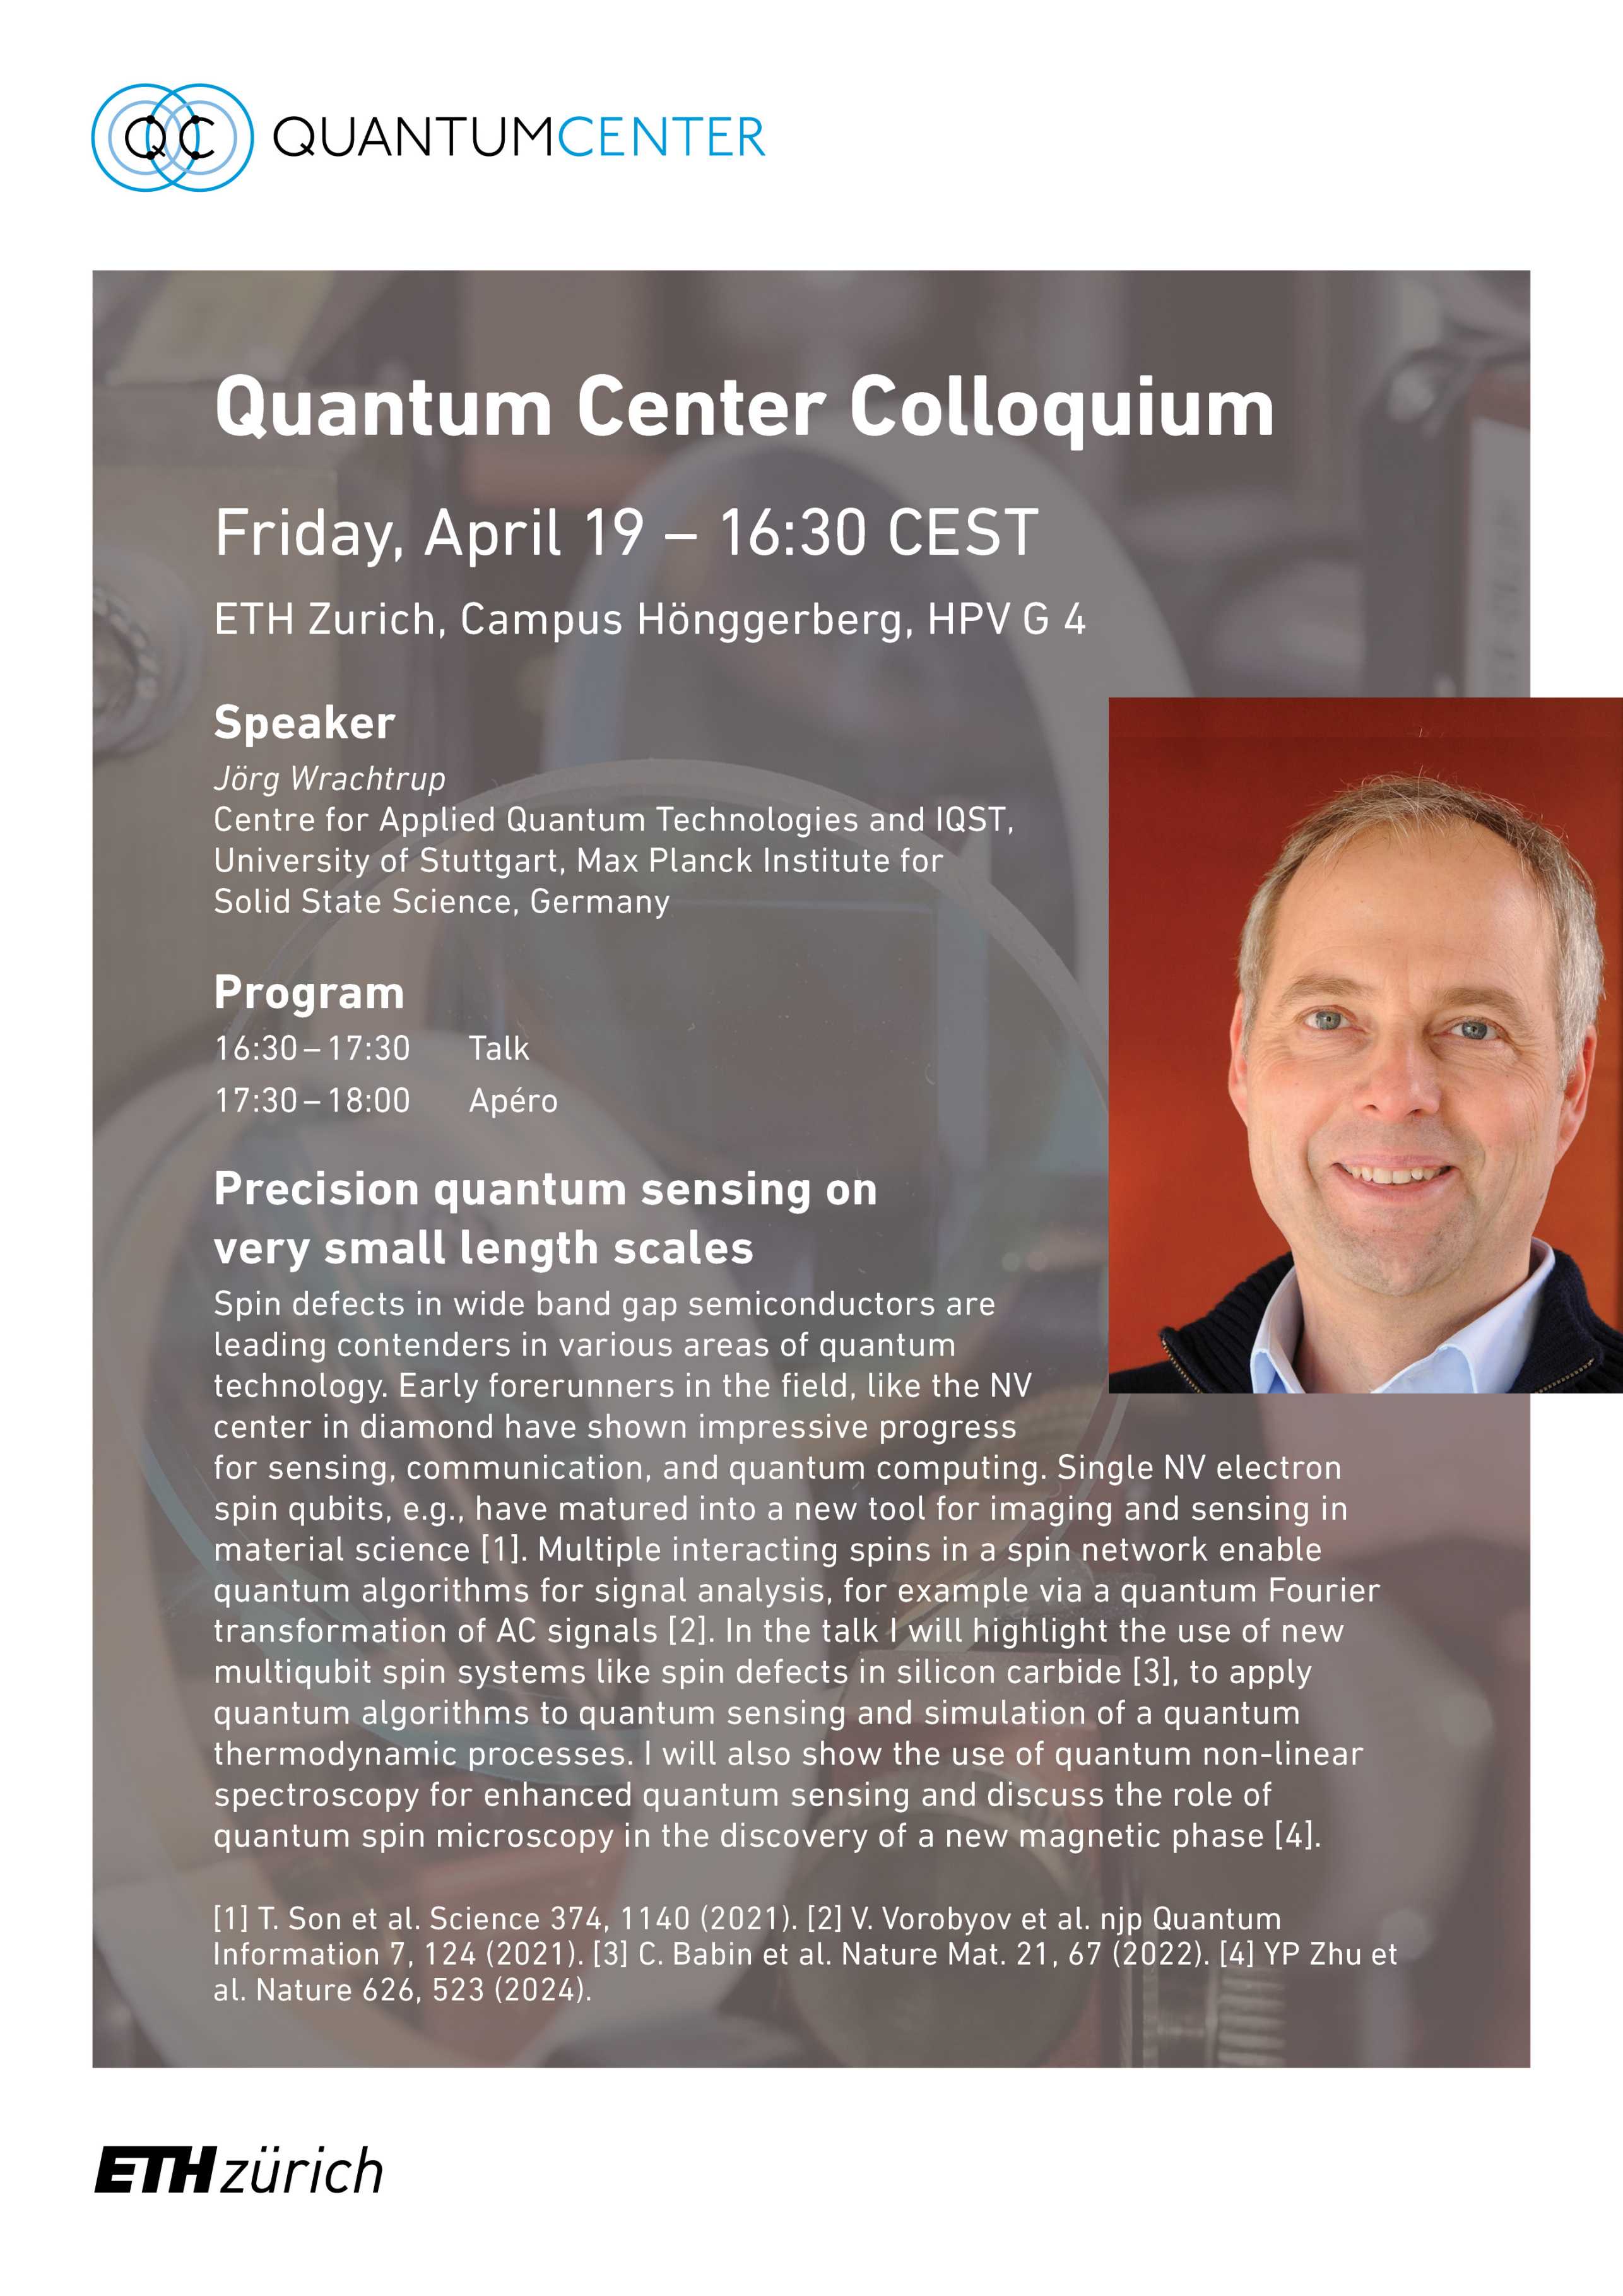 Quantum Center Colloquium with Jörg Wrachtrup